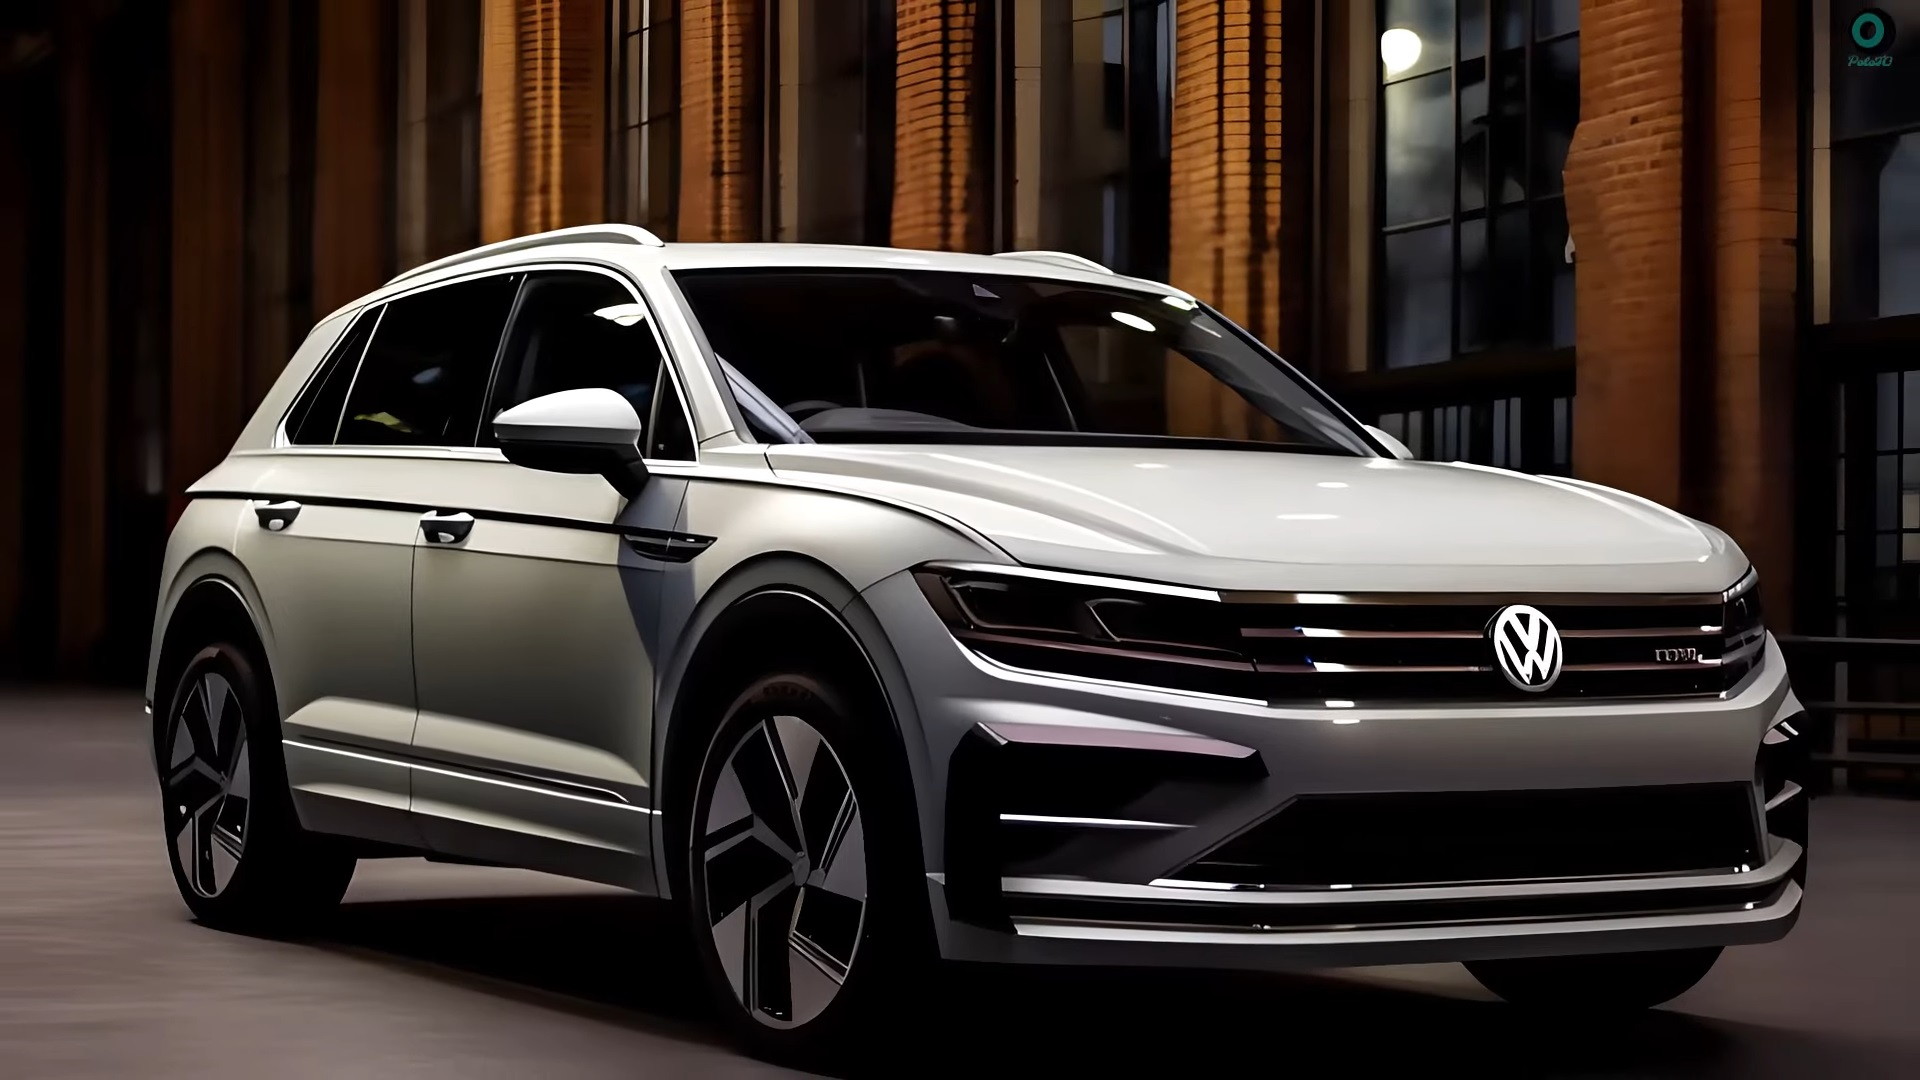 Rendering: 2025 Volkswagen Tiguan Looks Like an Evolution of the